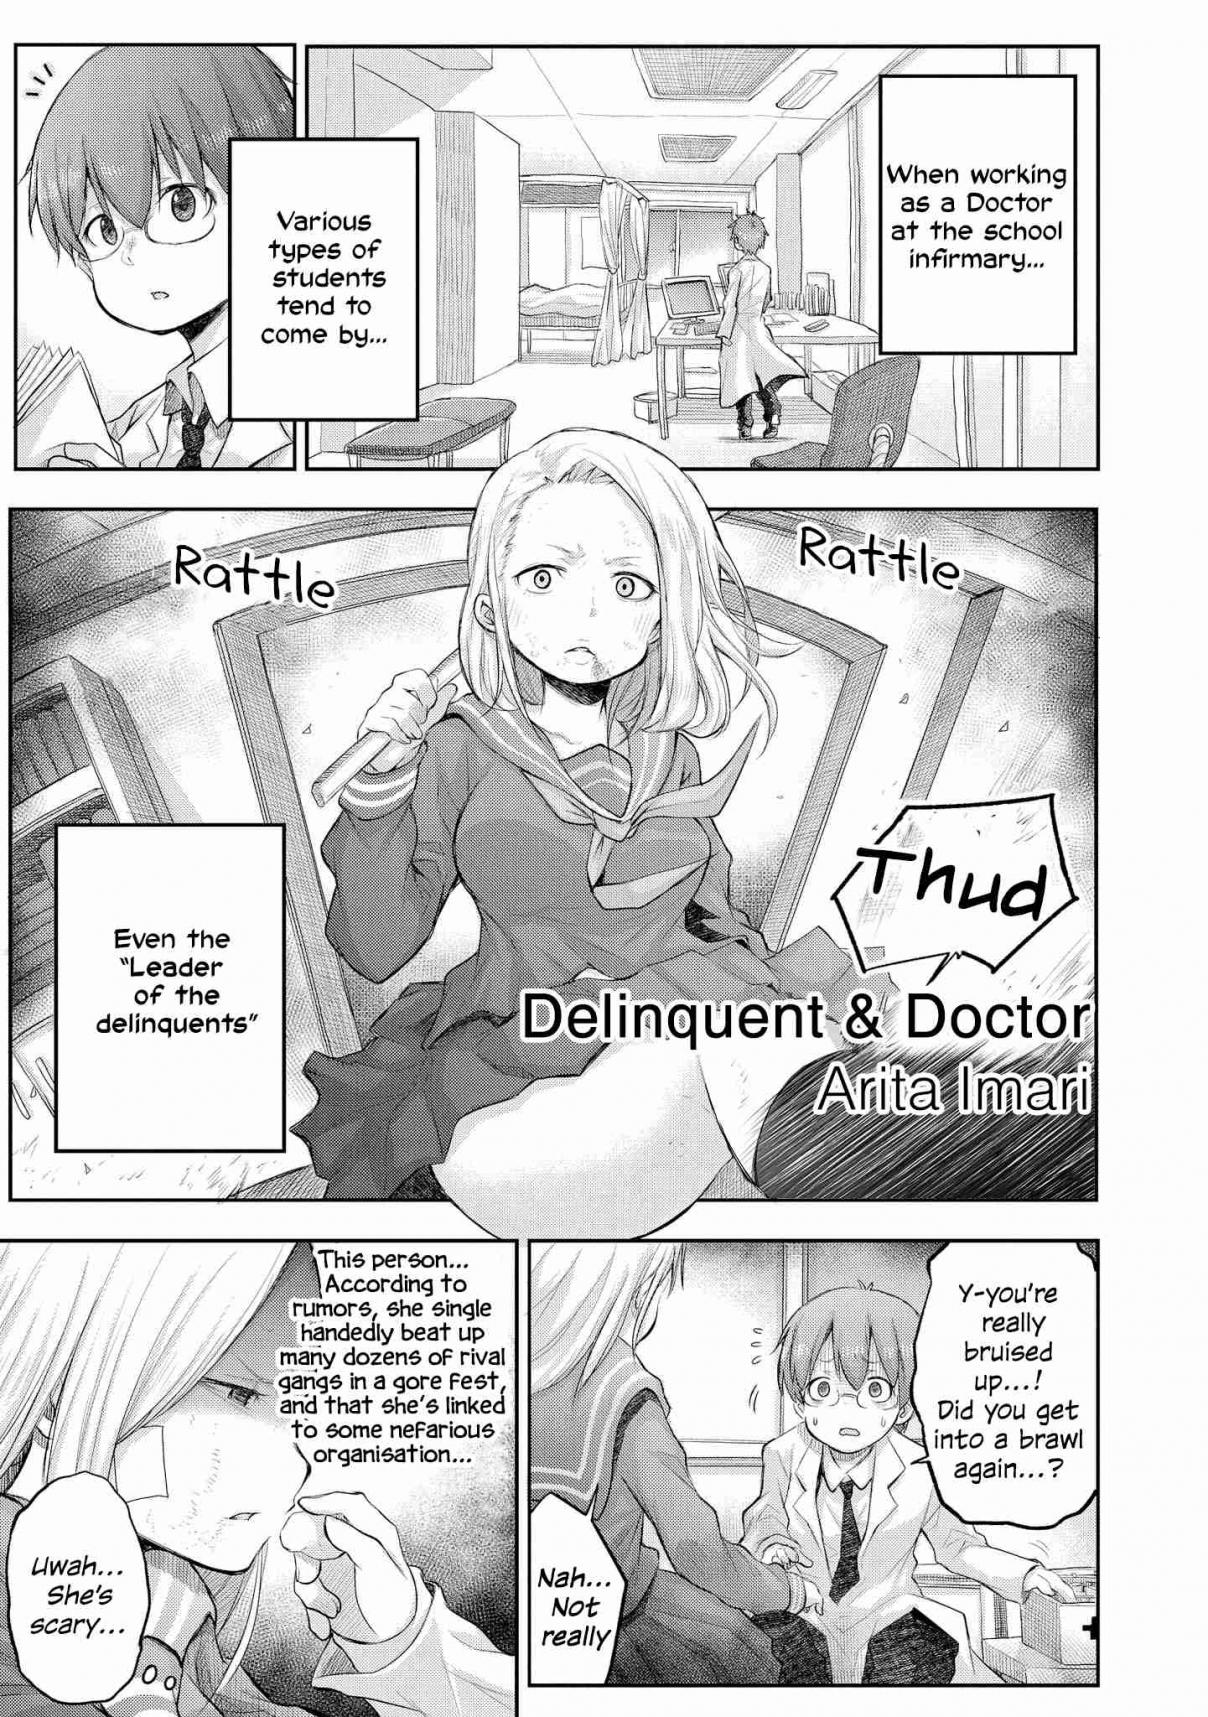 Precious 4p Short Stories Ch. 9 Delinquent & Doctor [by Arita Imari]